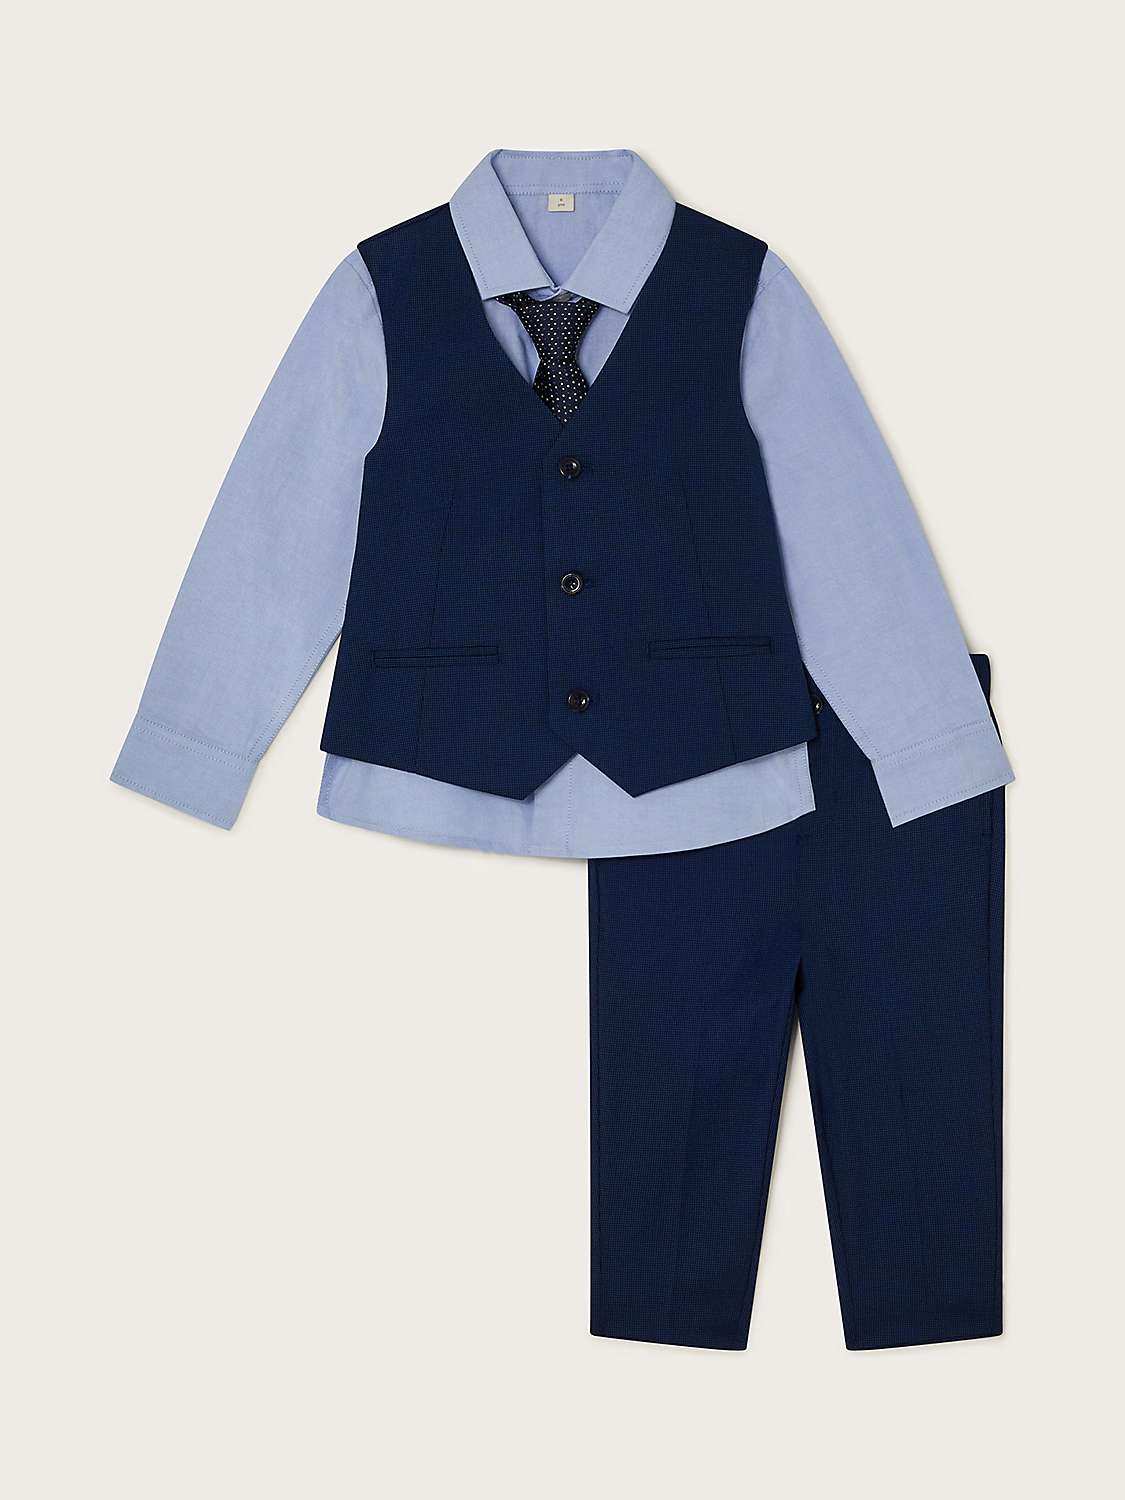 Buy Monsoon Kids' New Adam 4 Piece Suit Set, Navy Online at johnlewis.com